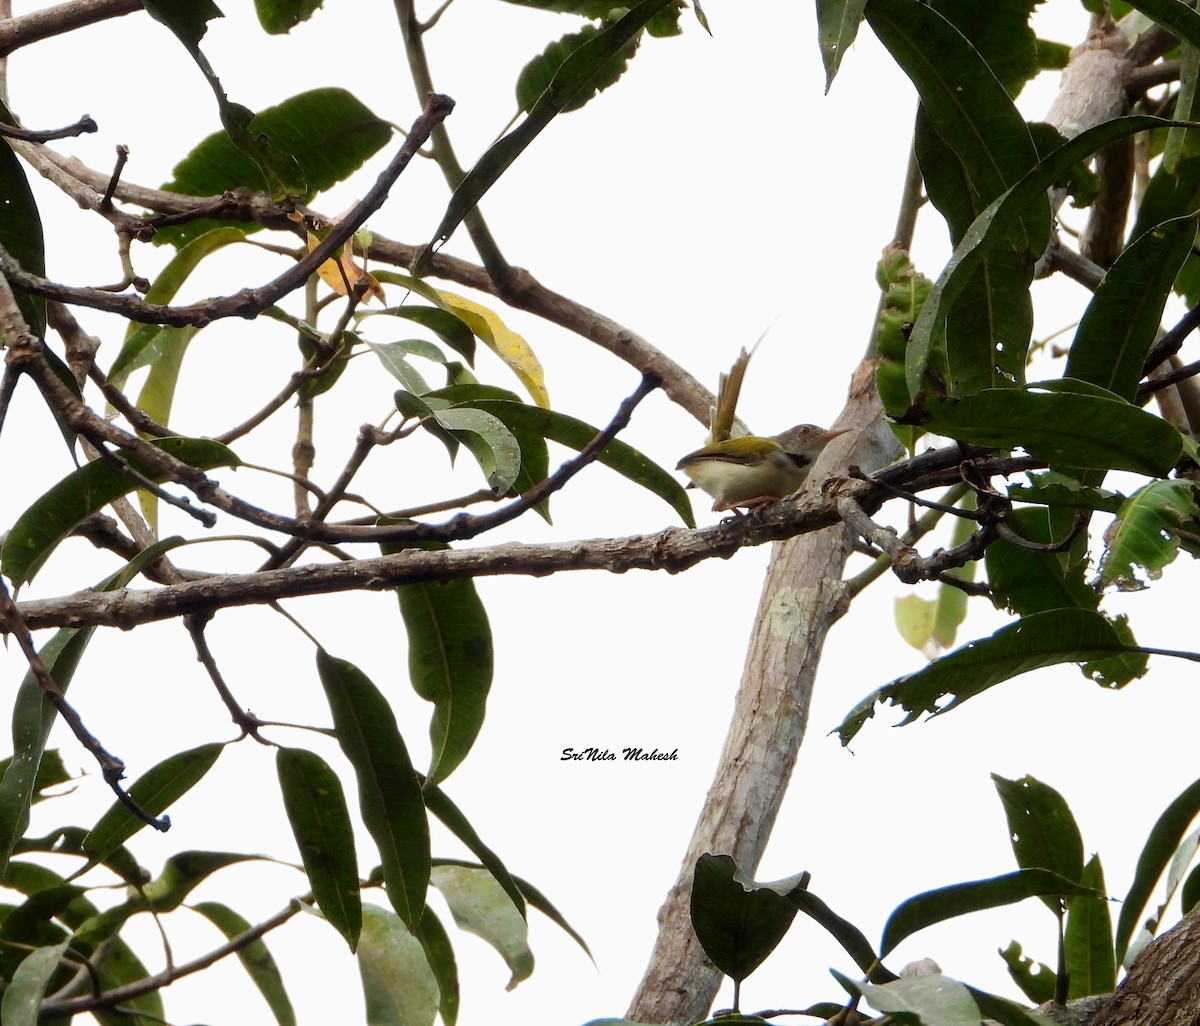 Common Tailorbird - SRINILA MAHESH K T